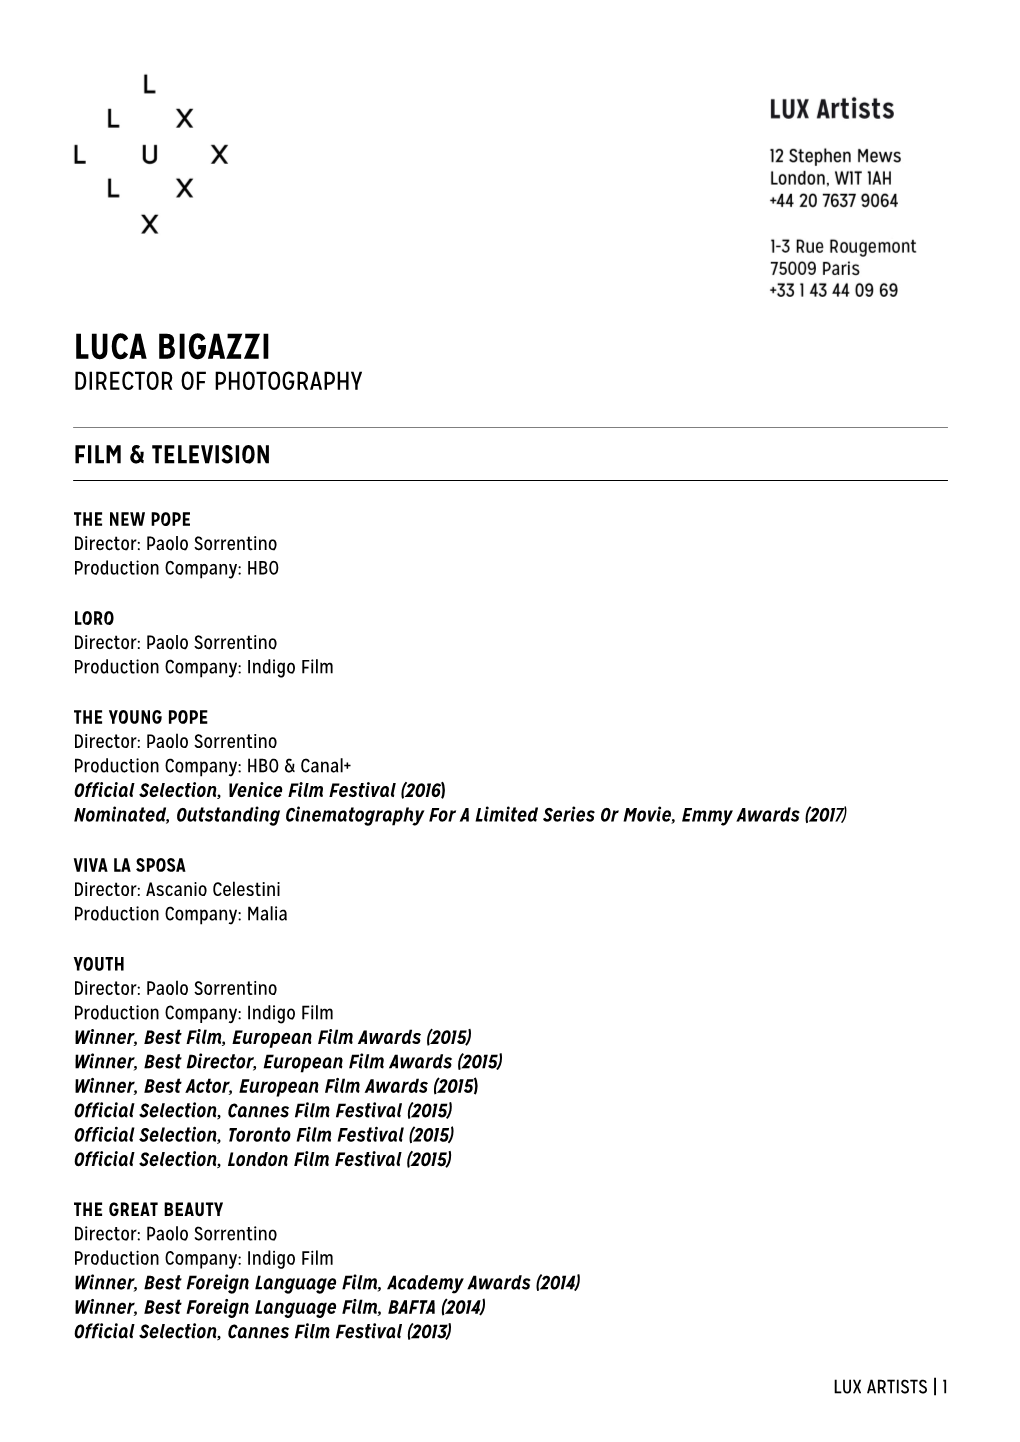 Luca Bigazzi Director of Photography